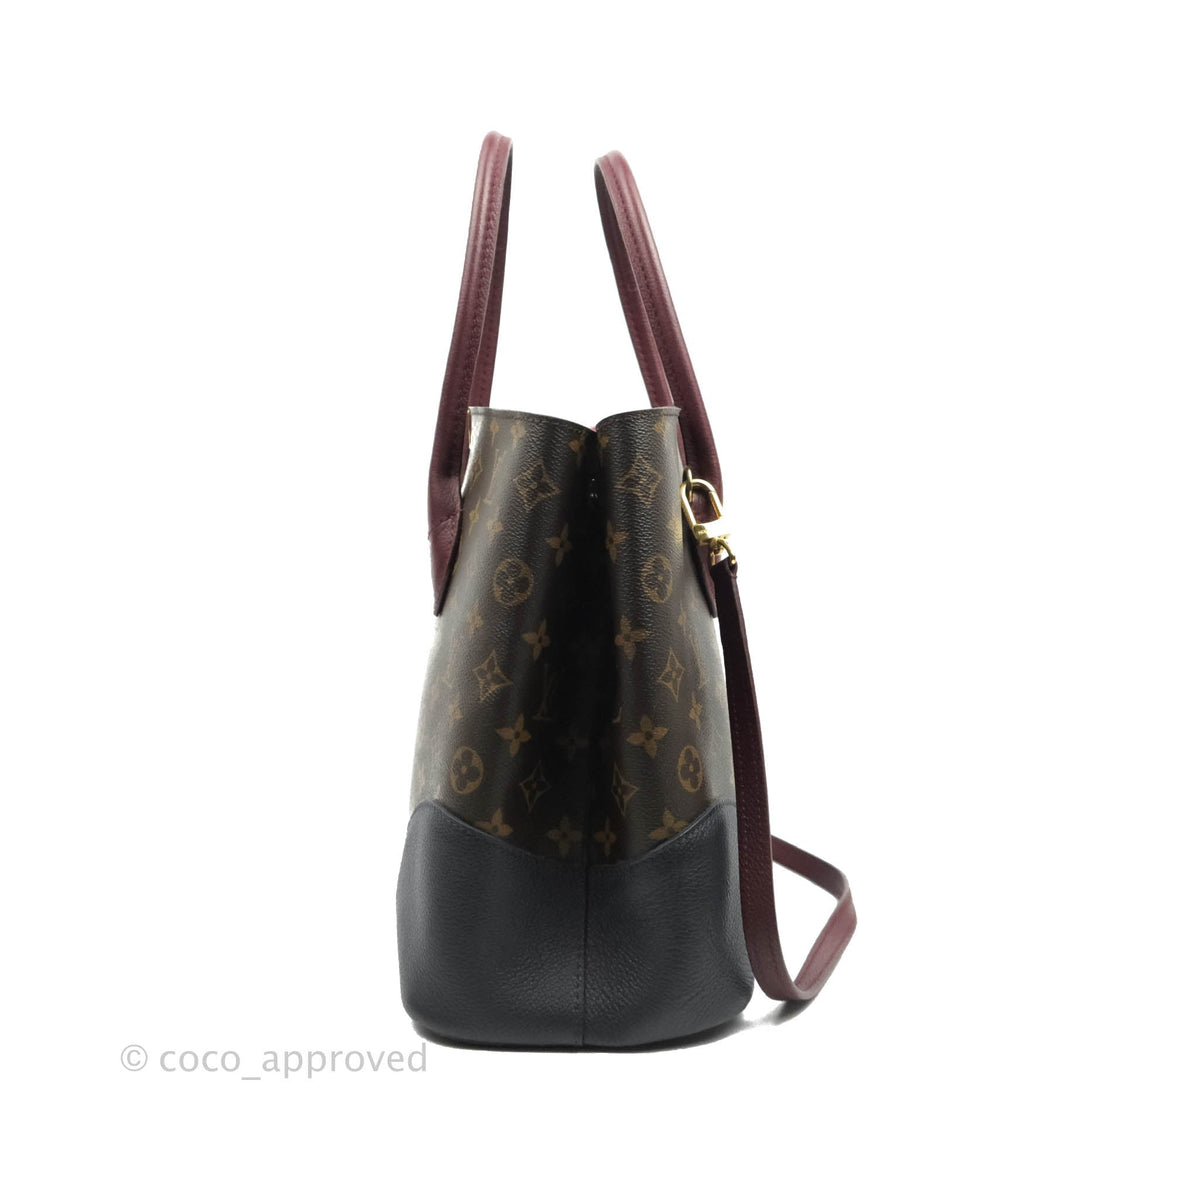 Sold at Auction: Louis Vuitton, Louis Vuitton 'Flandrin' Handbag